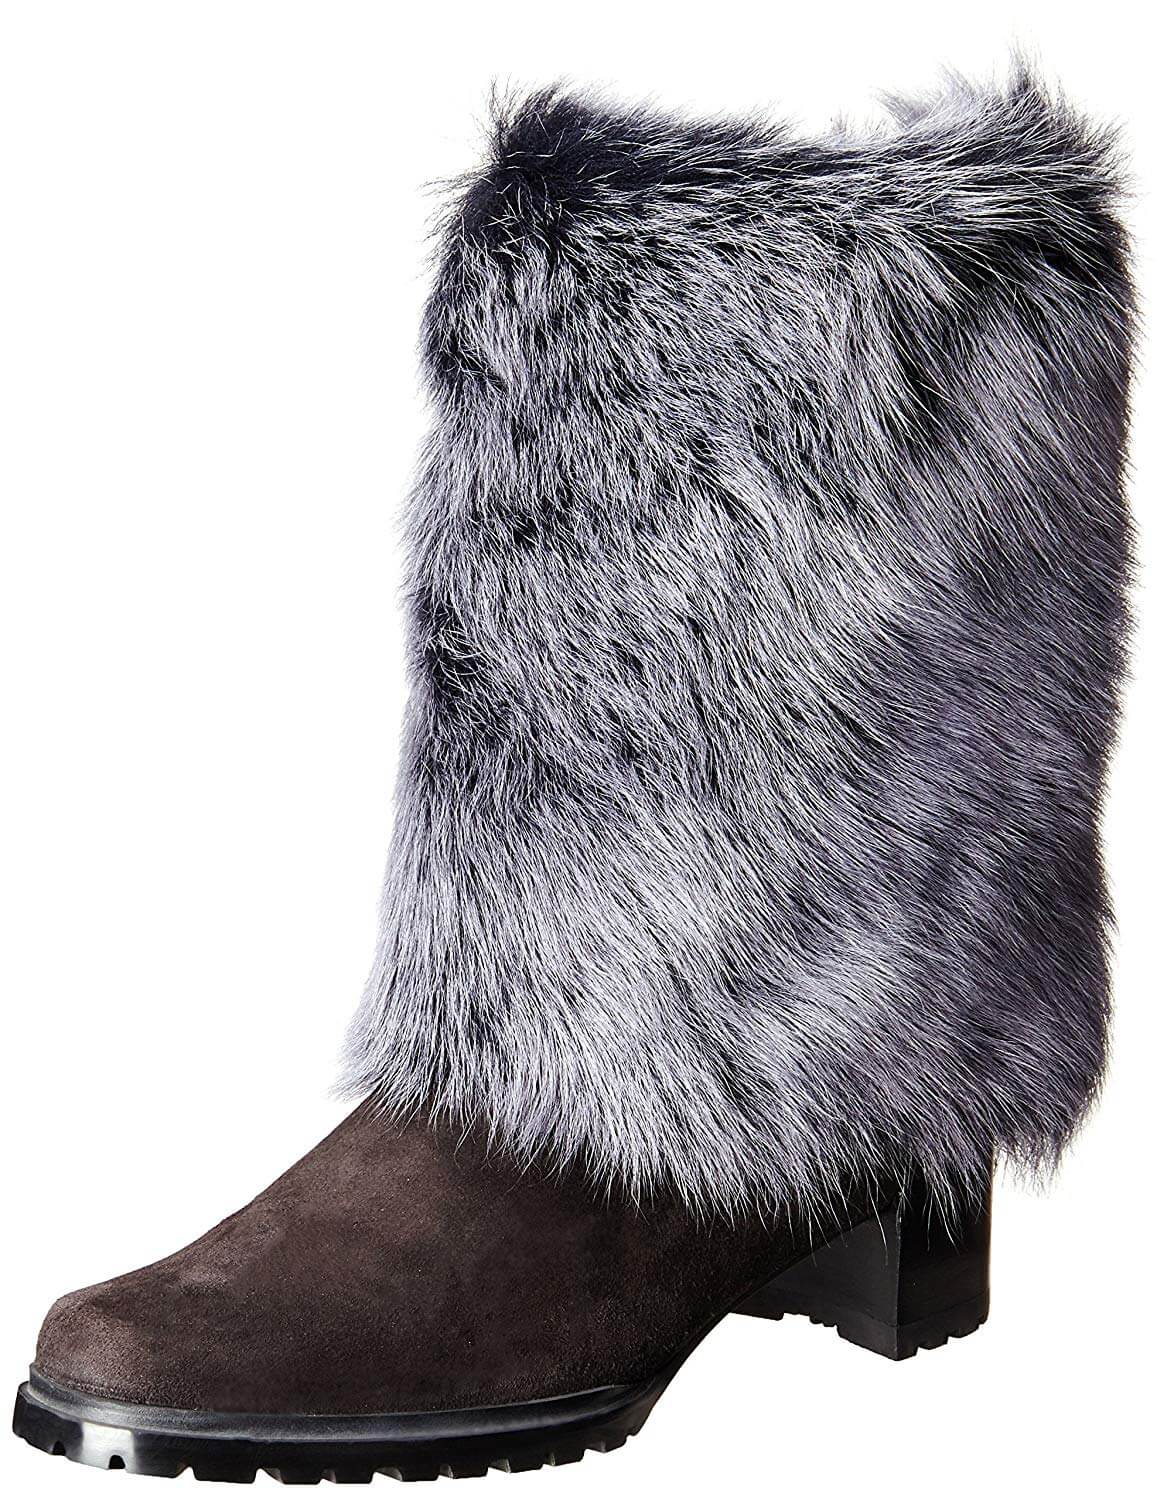 women's winter boots canada